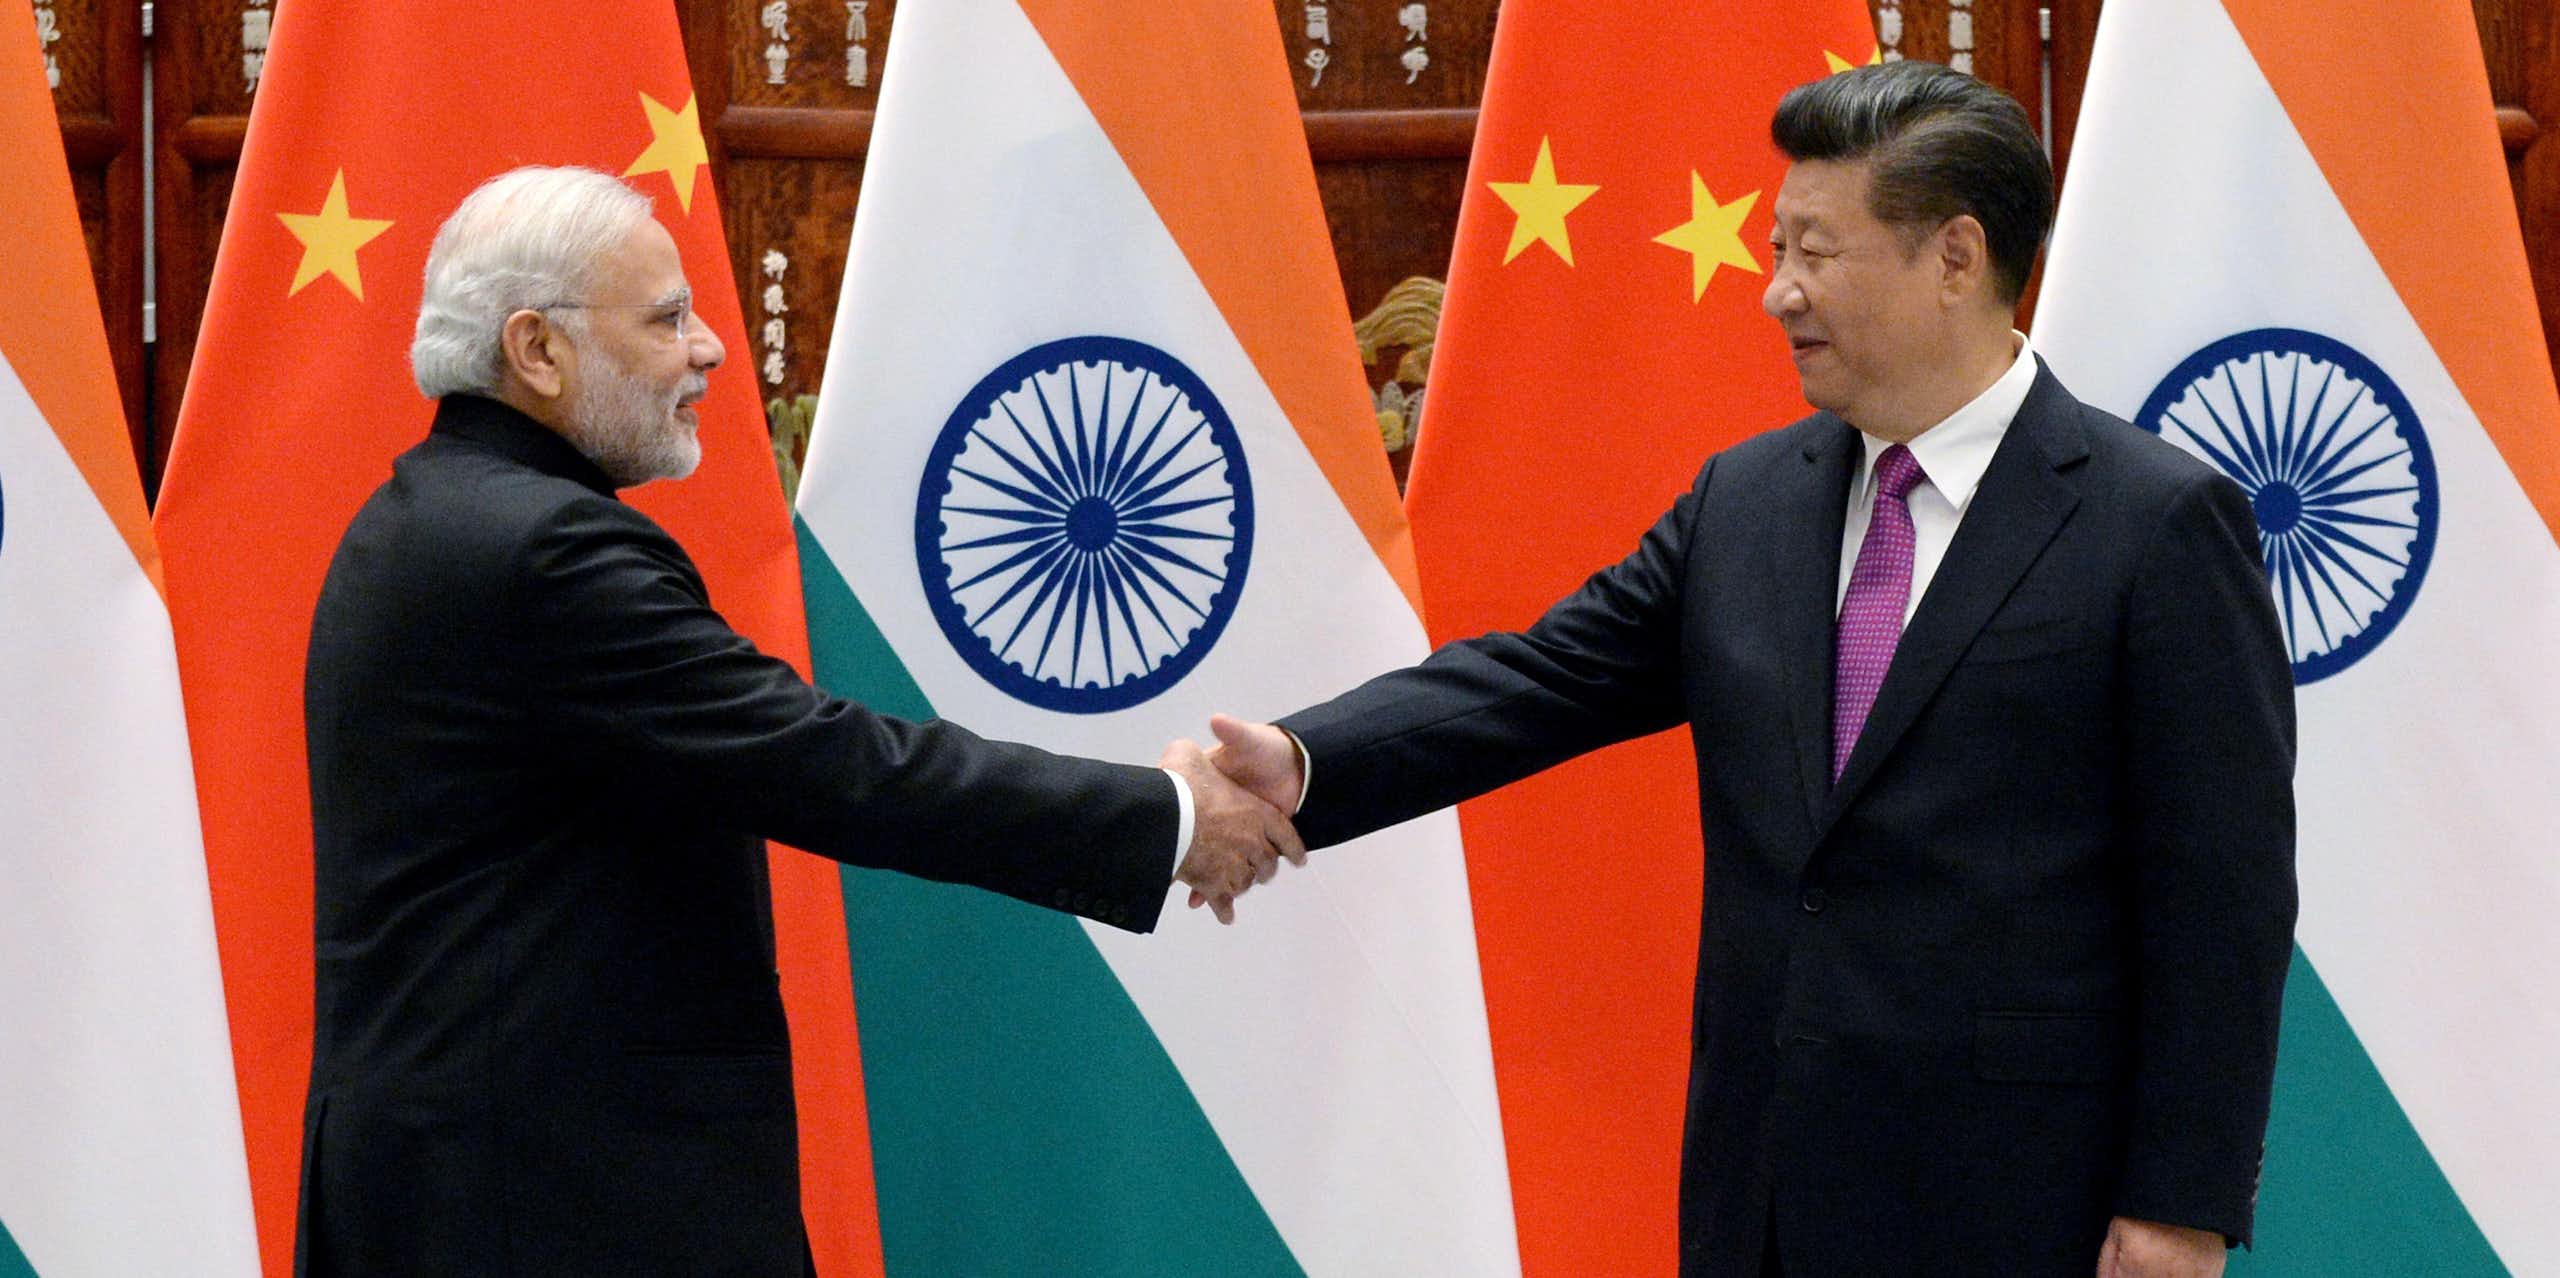 Modi and Xi shake hands